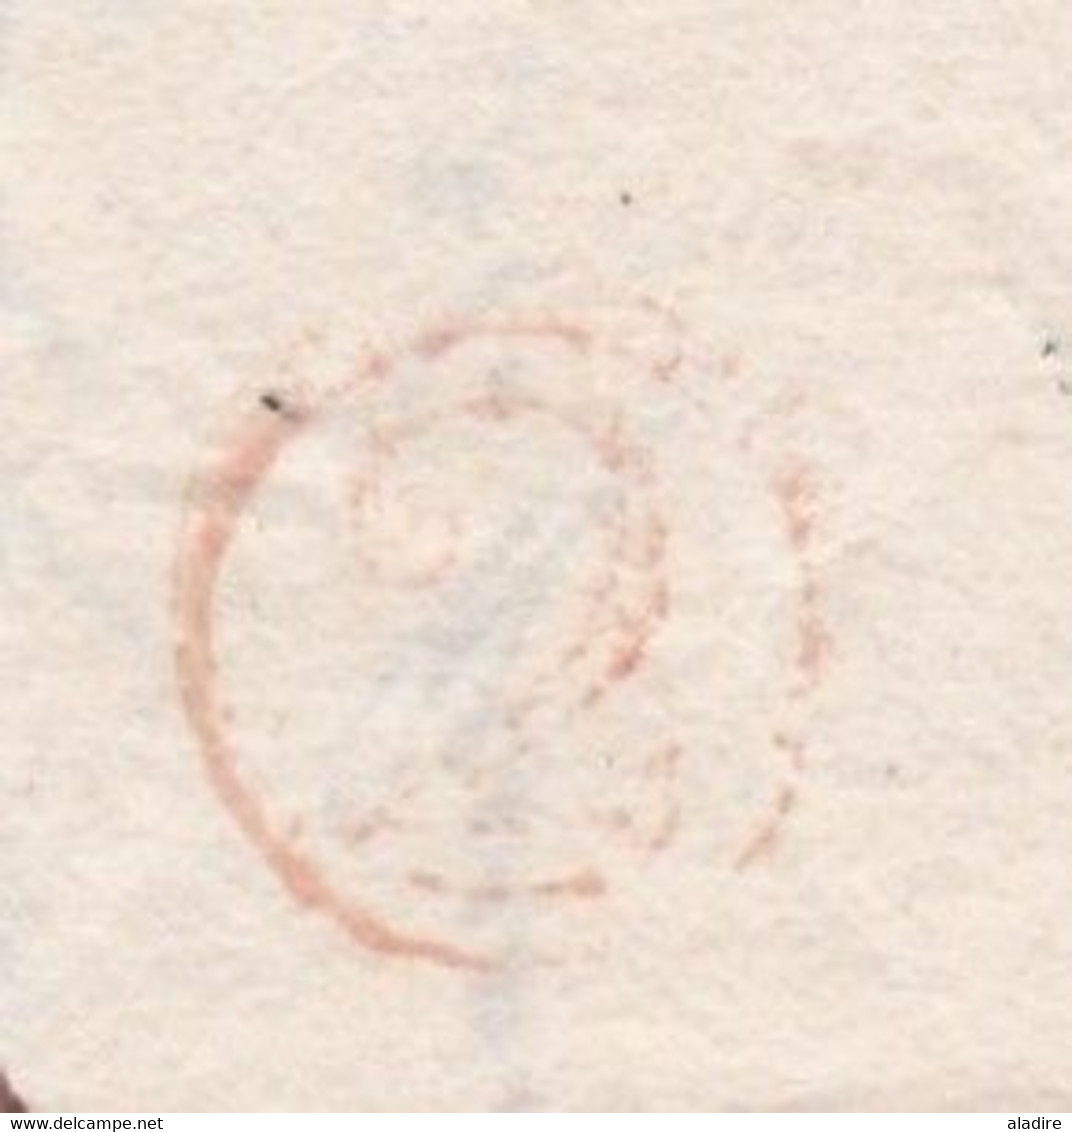 1814 - Marque Postale 106 CAZAL (24 x 4 mm ) Casale  (Marengo)  sur LAC vers TORINO Turin - taxe 6 - Contrôle 2 au verso